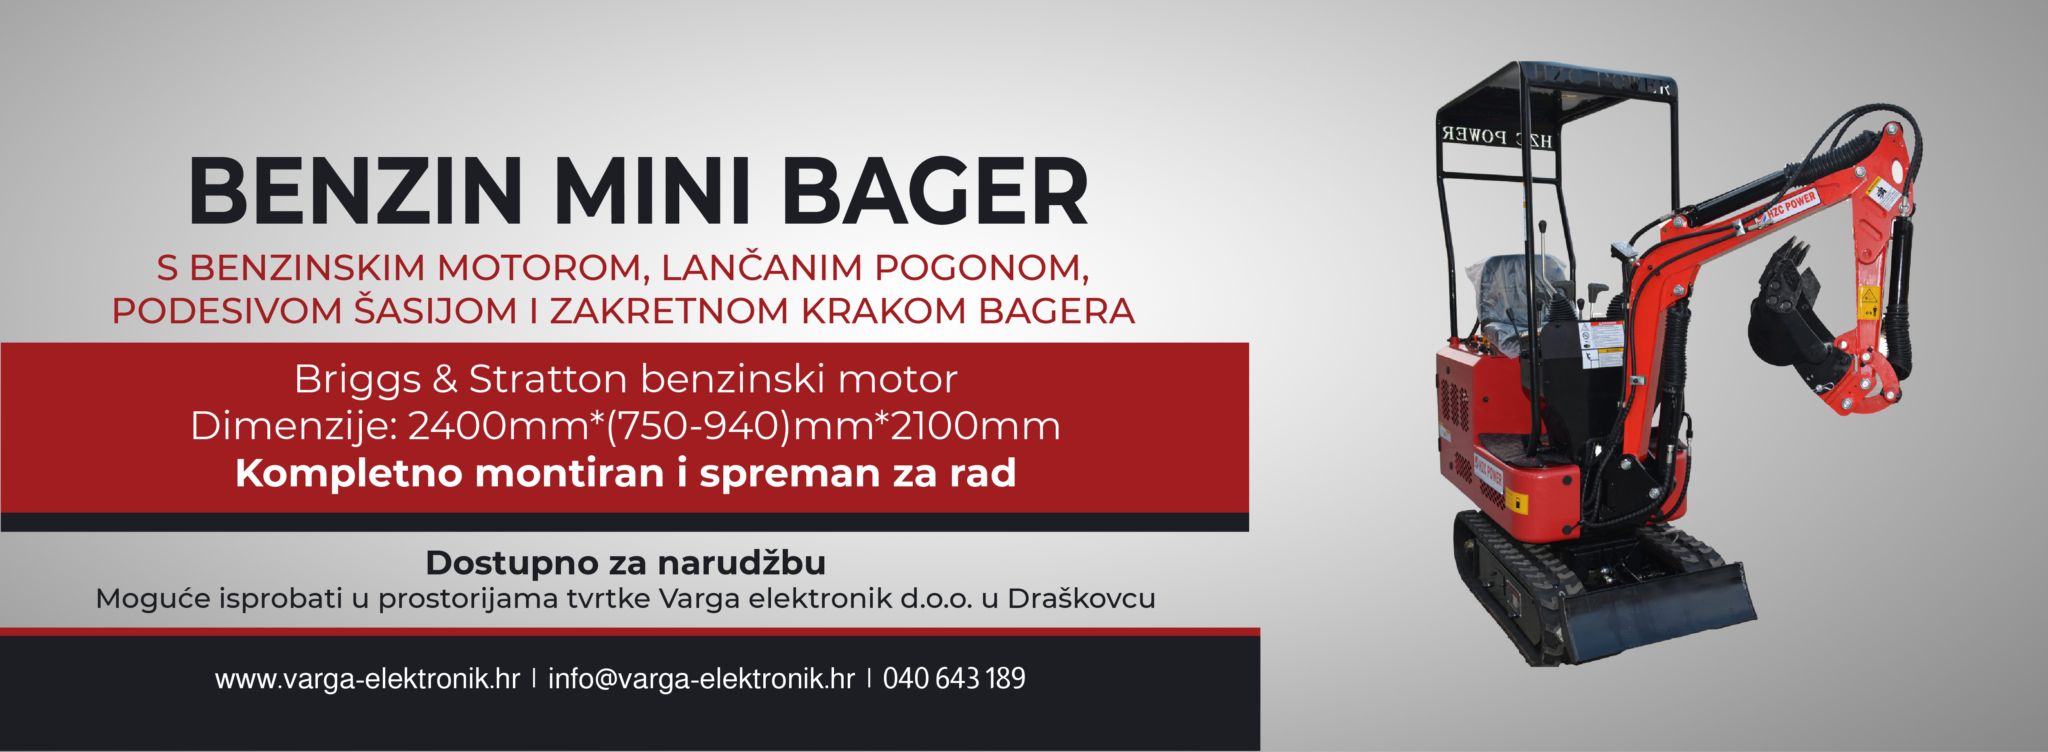 benzin mini bager radna_banner webpage